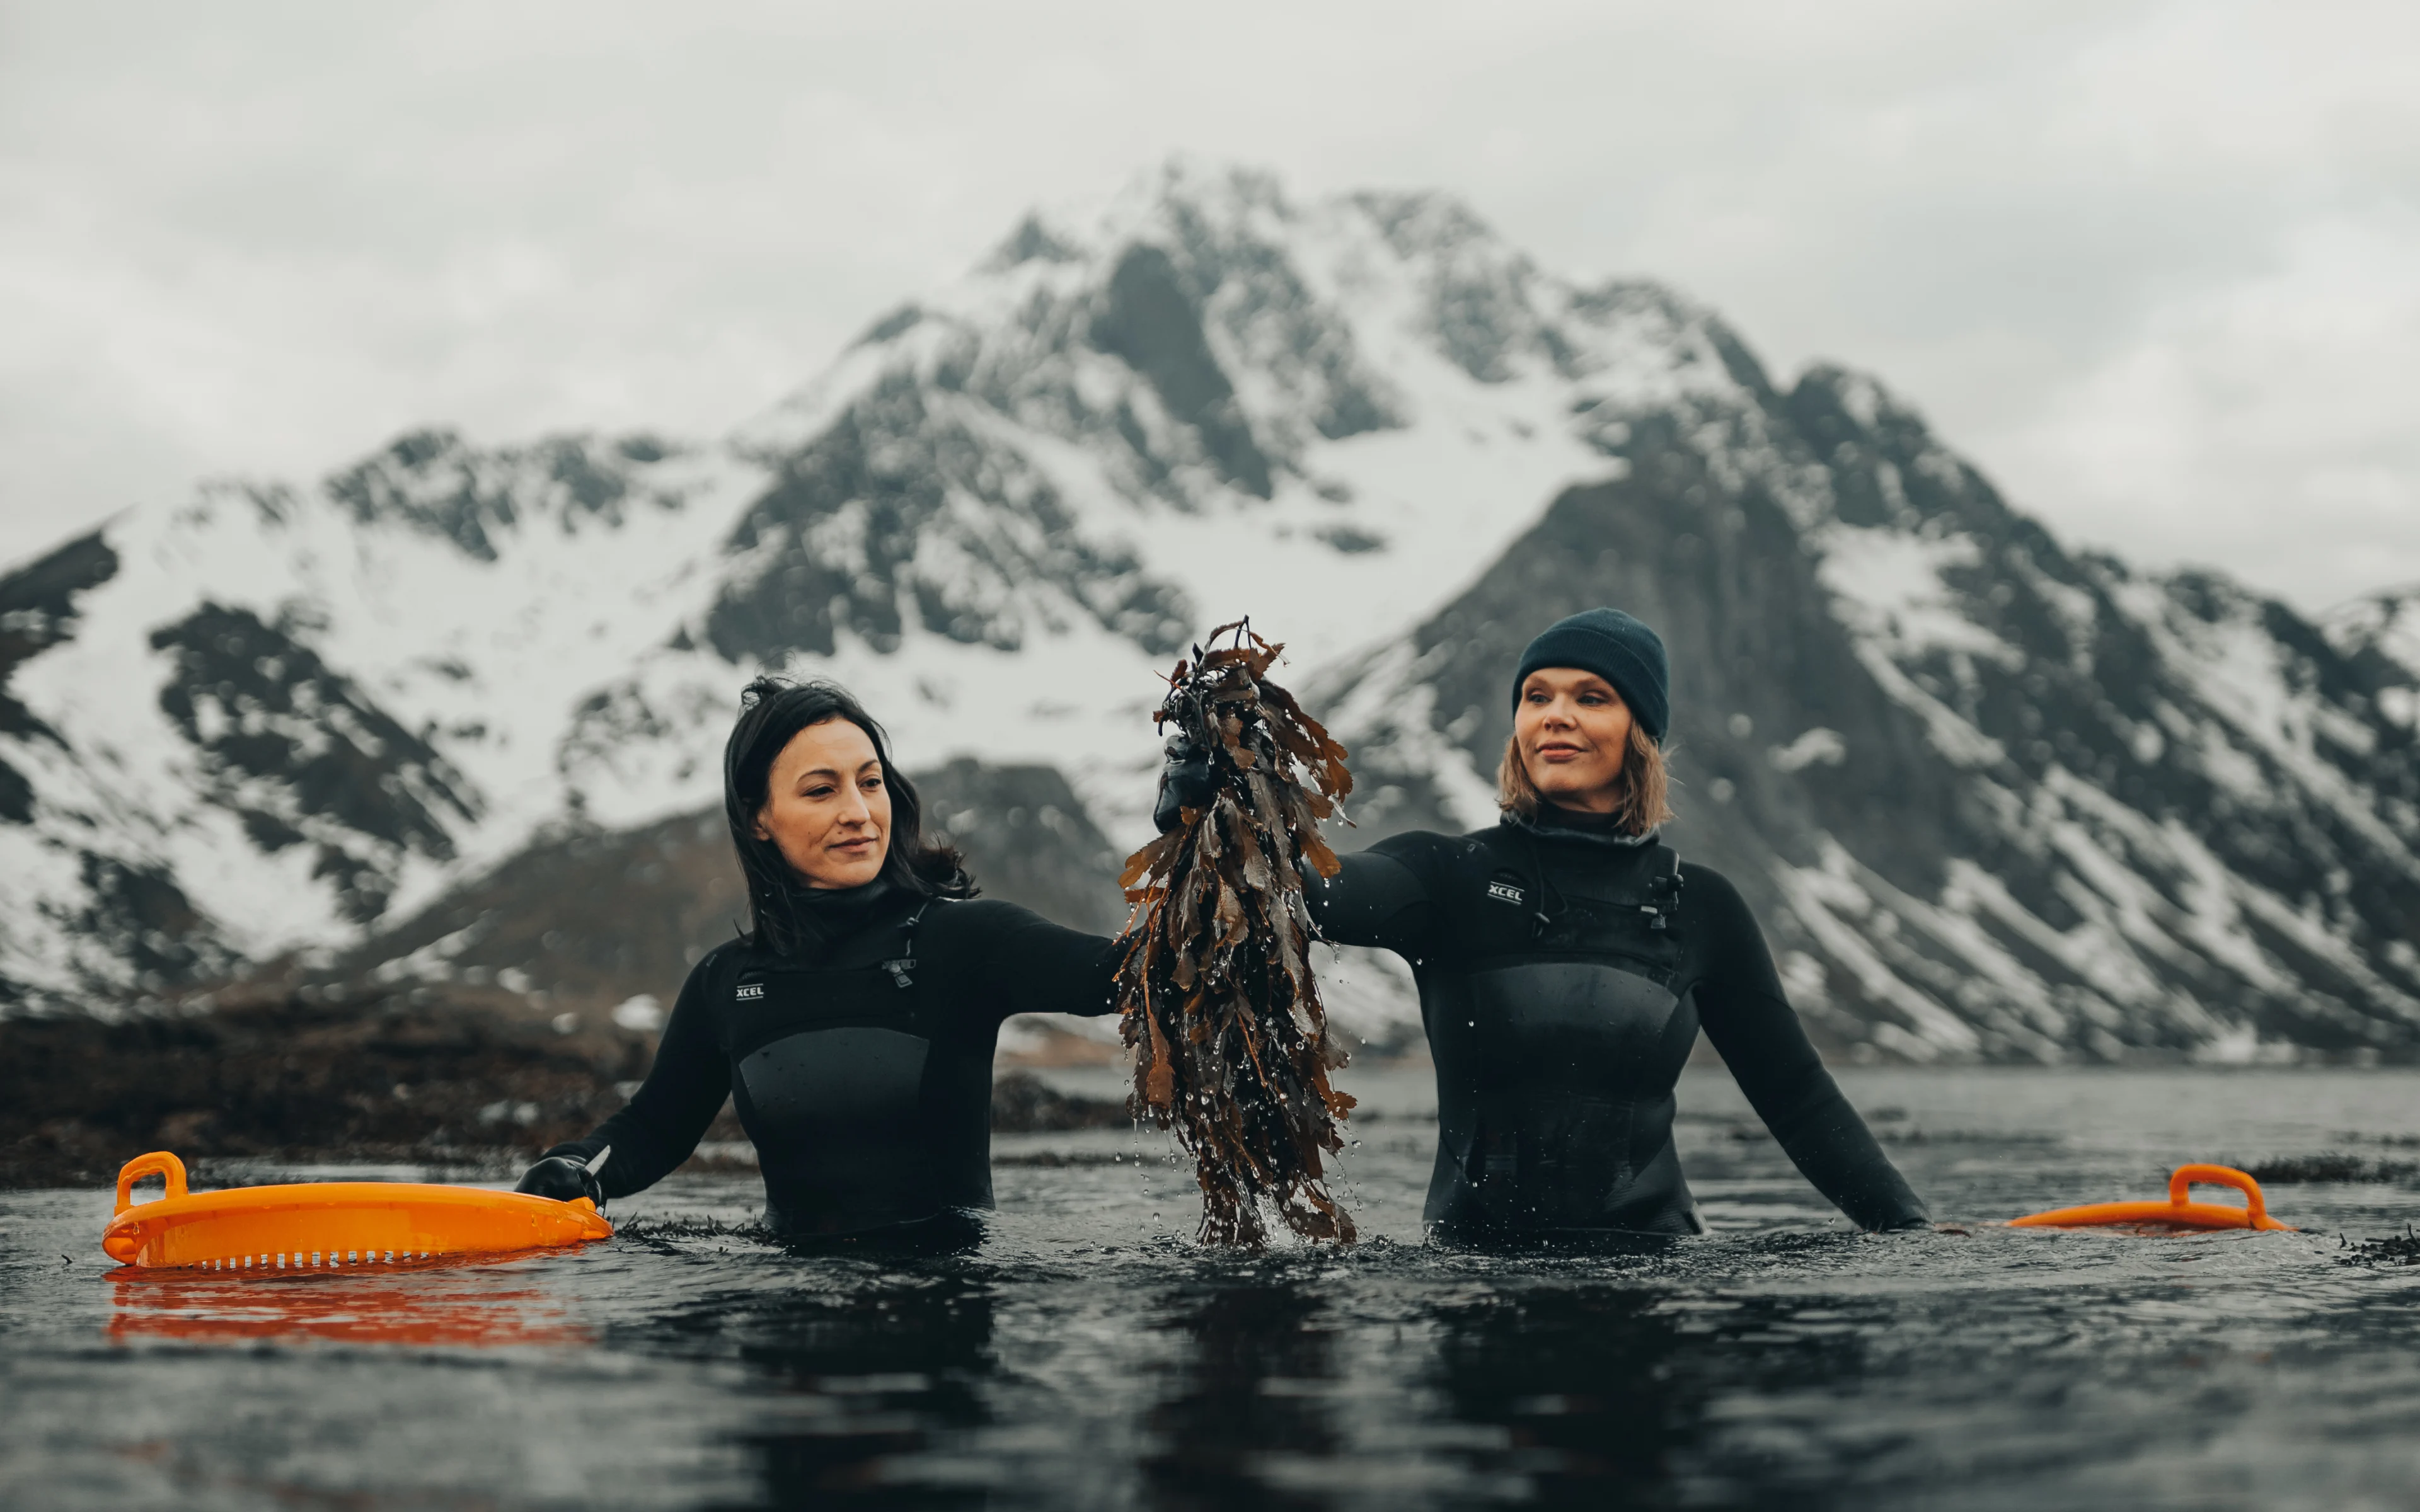 Lofoten Seaweed – bæredygtig superfood af tang